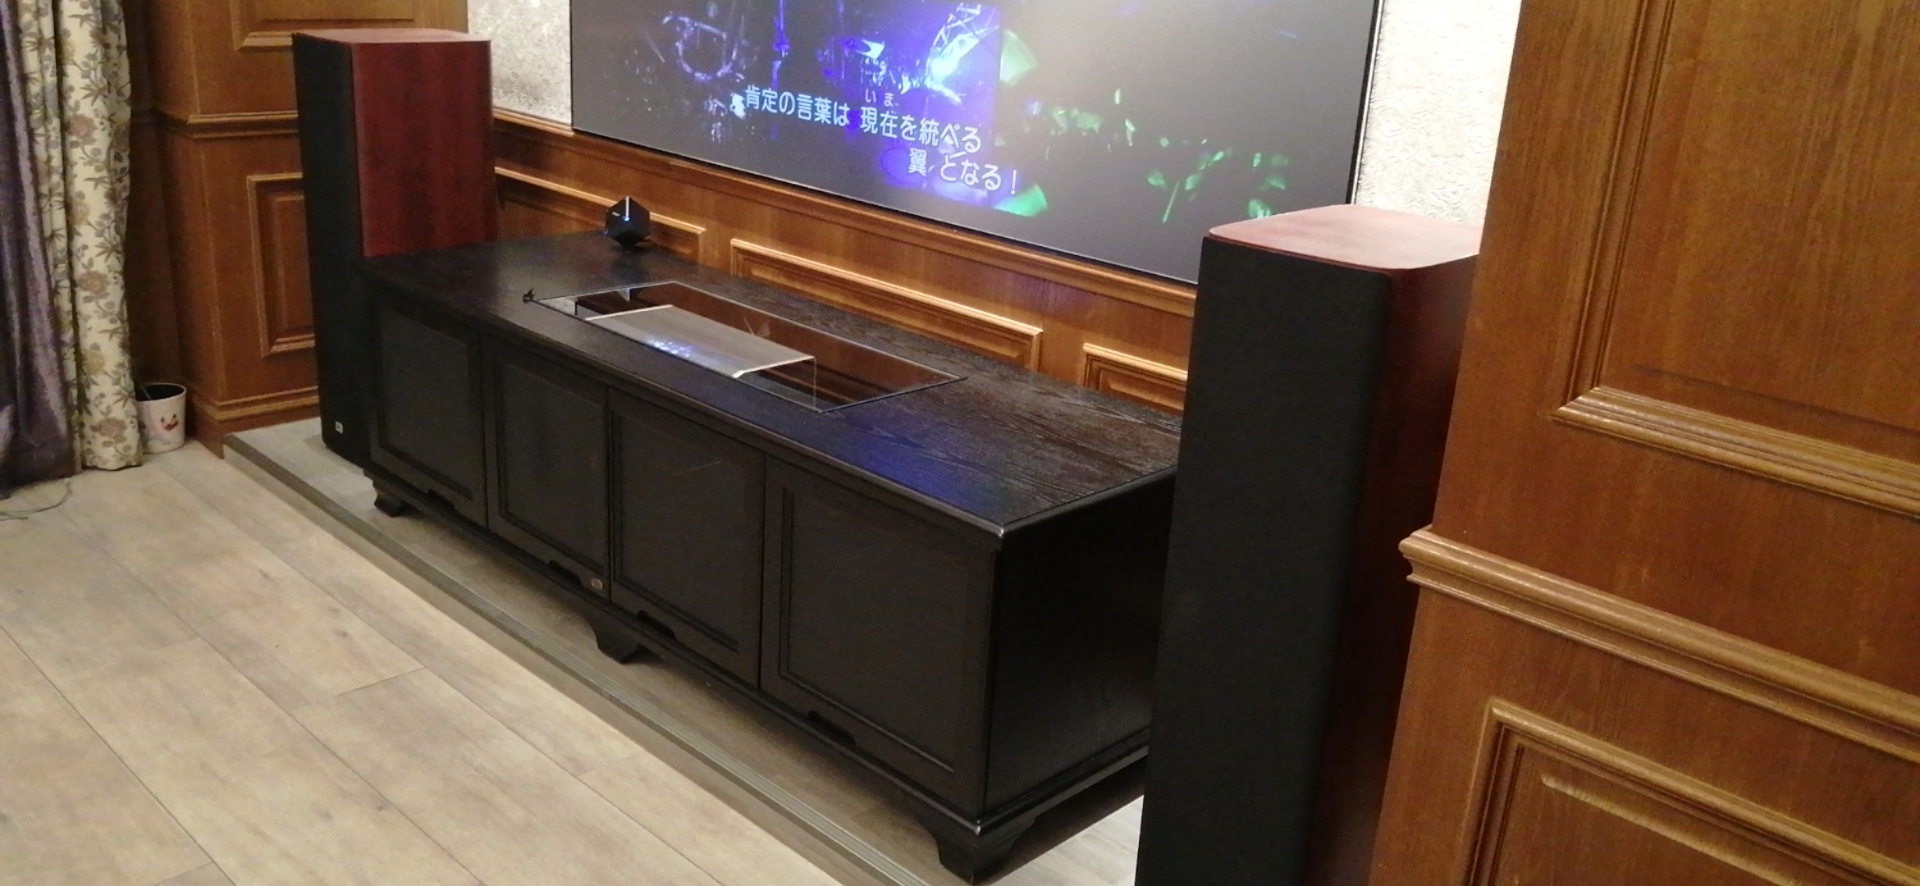 E-JOIN猛犸激光电视柜E82珍珠白现代简约激光电视柜 - E-JOIN 猛犸 - 青岛艾斯卡影音设备有限公司